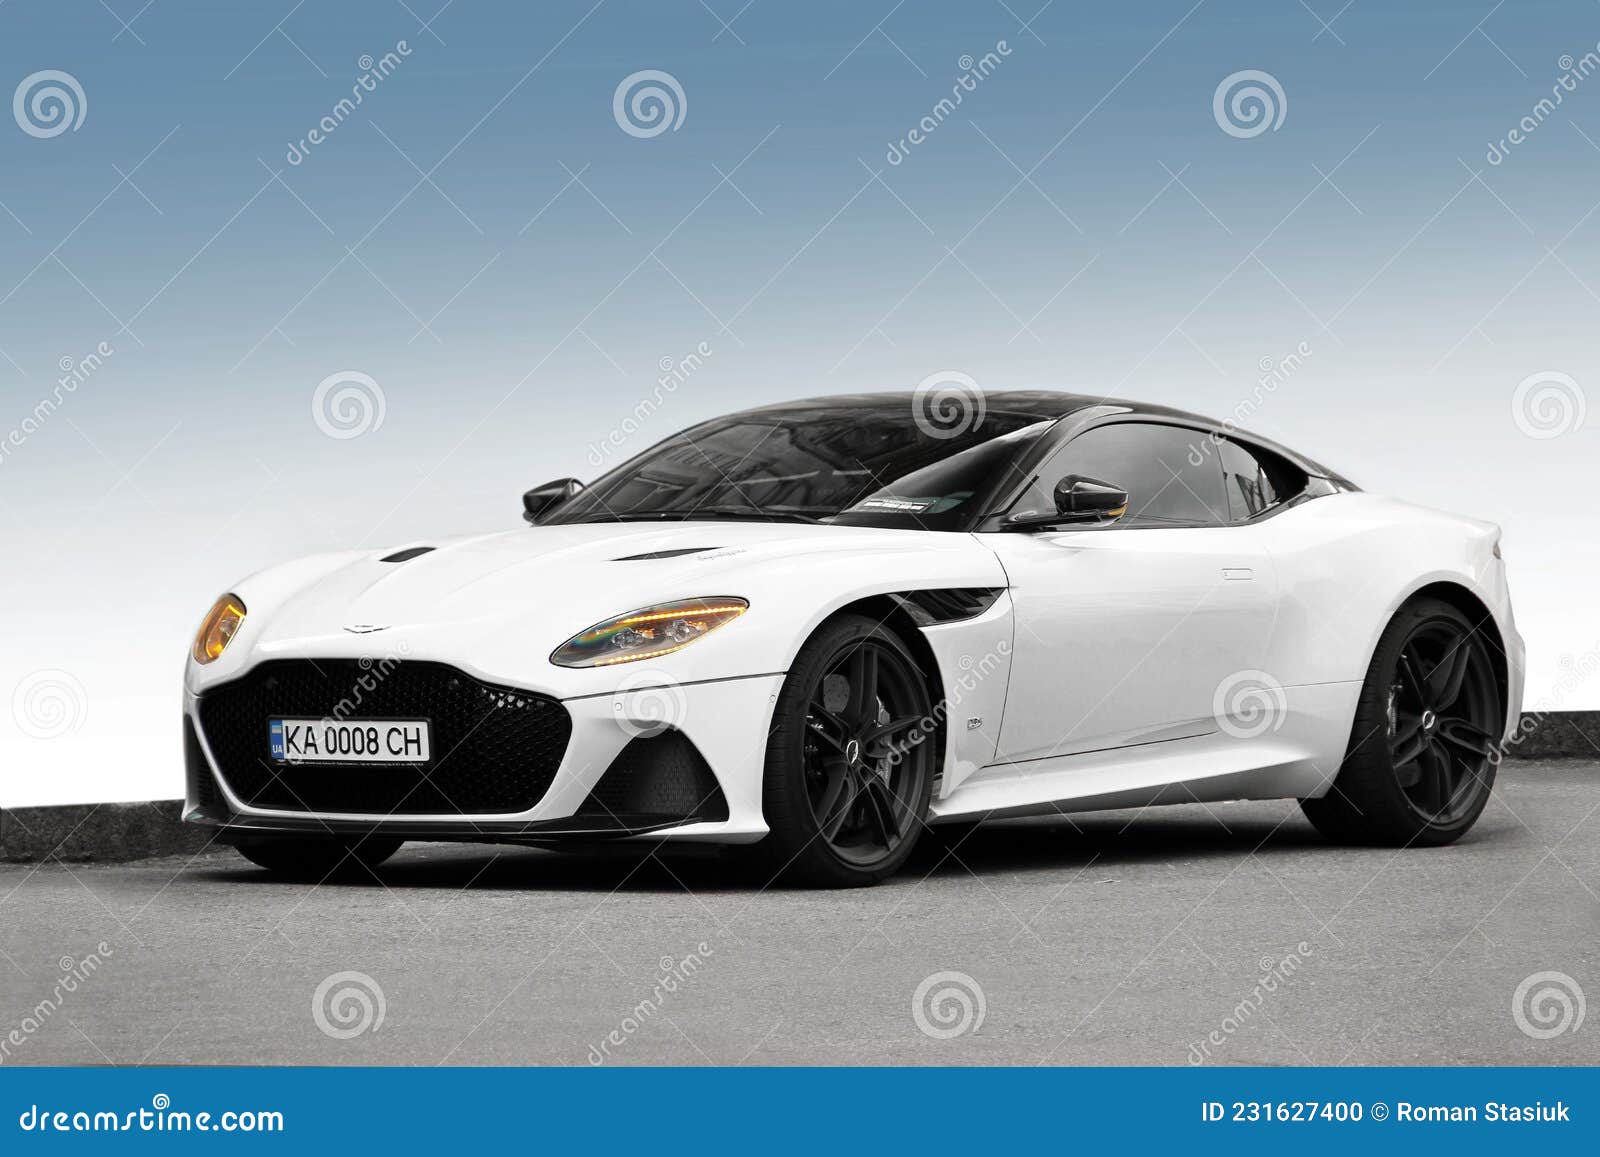 Kiev, Ukraine - June 12, 2021: White English Supercar Aston Martin DBS  Superleggera on a Clean Background Editorial Image - Image of expensive,  automobile: 231627400